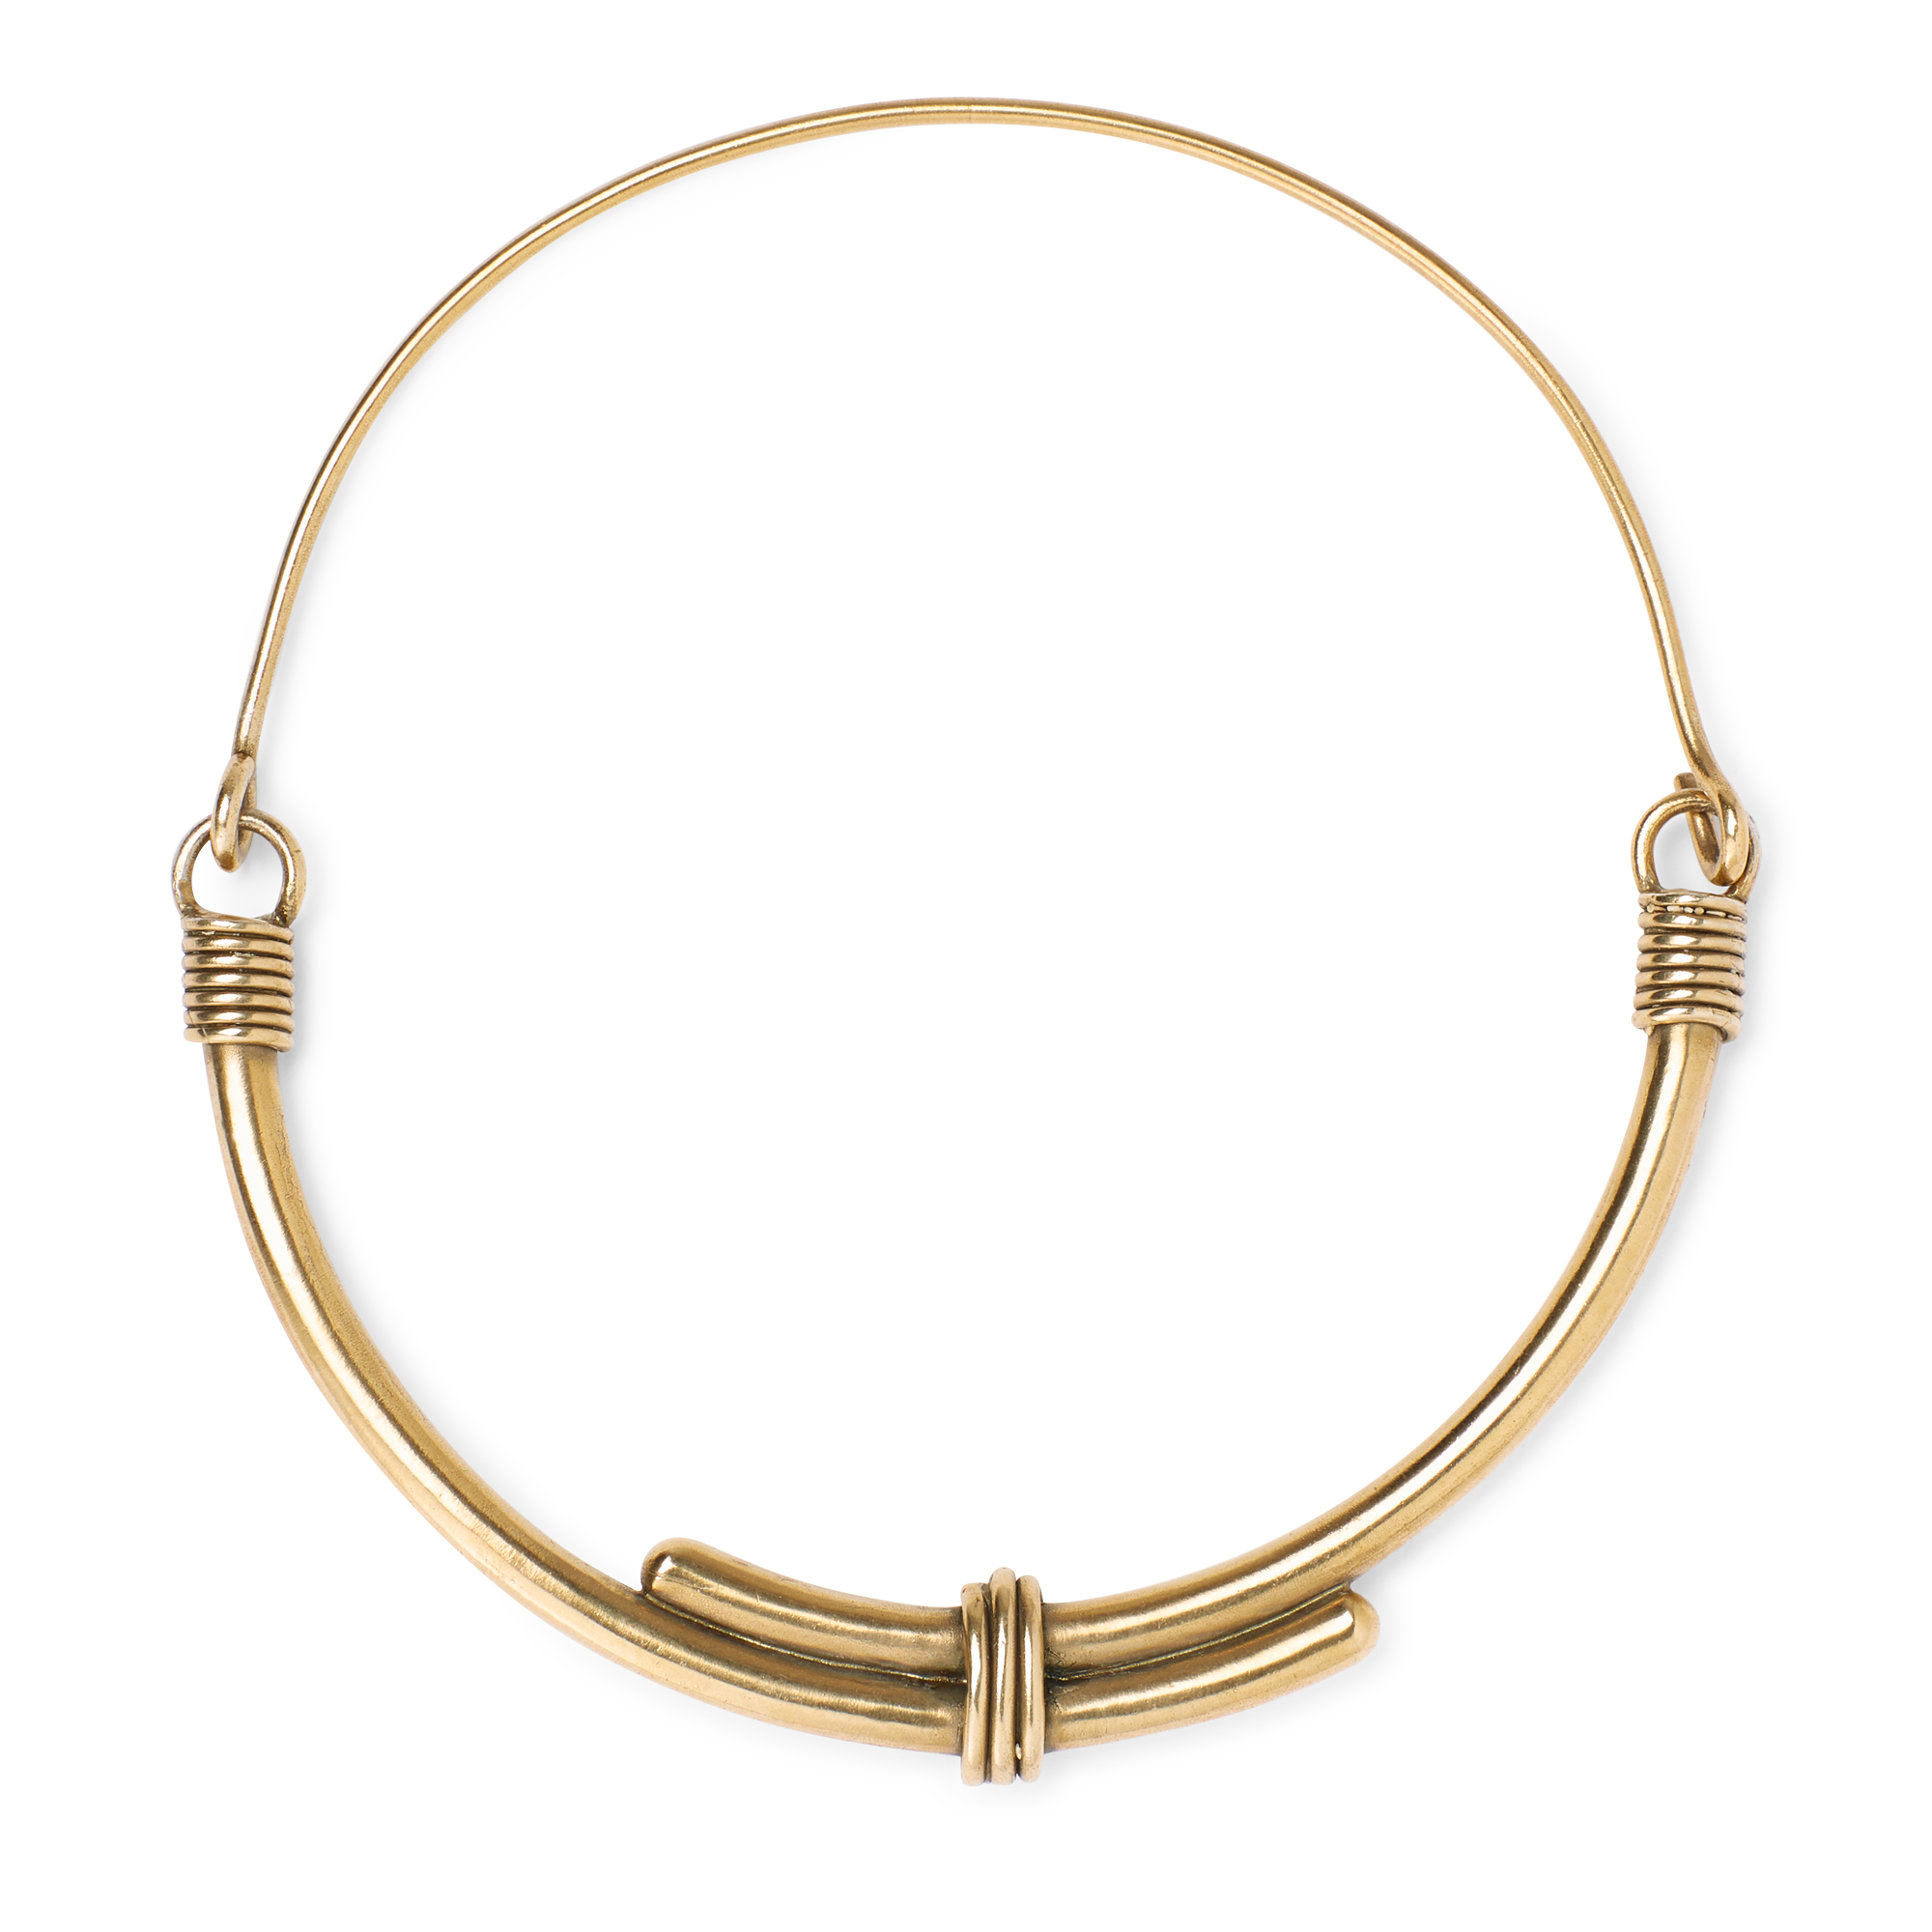 Ralph Lauren Whip Collar Necklace. 1